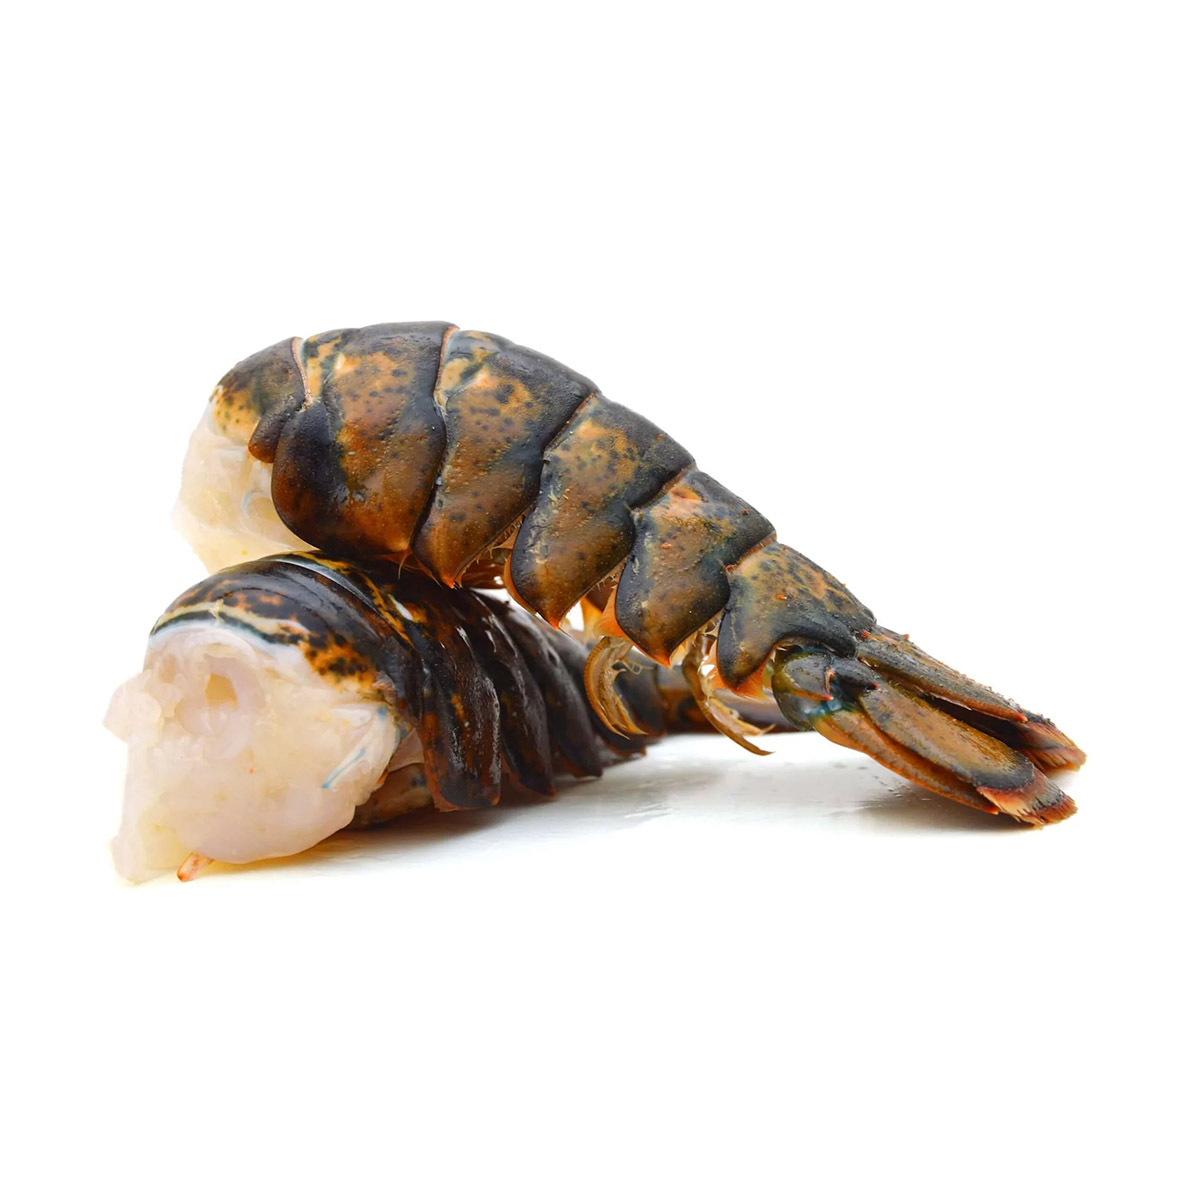 Split Lobster Tails – Grill Pack